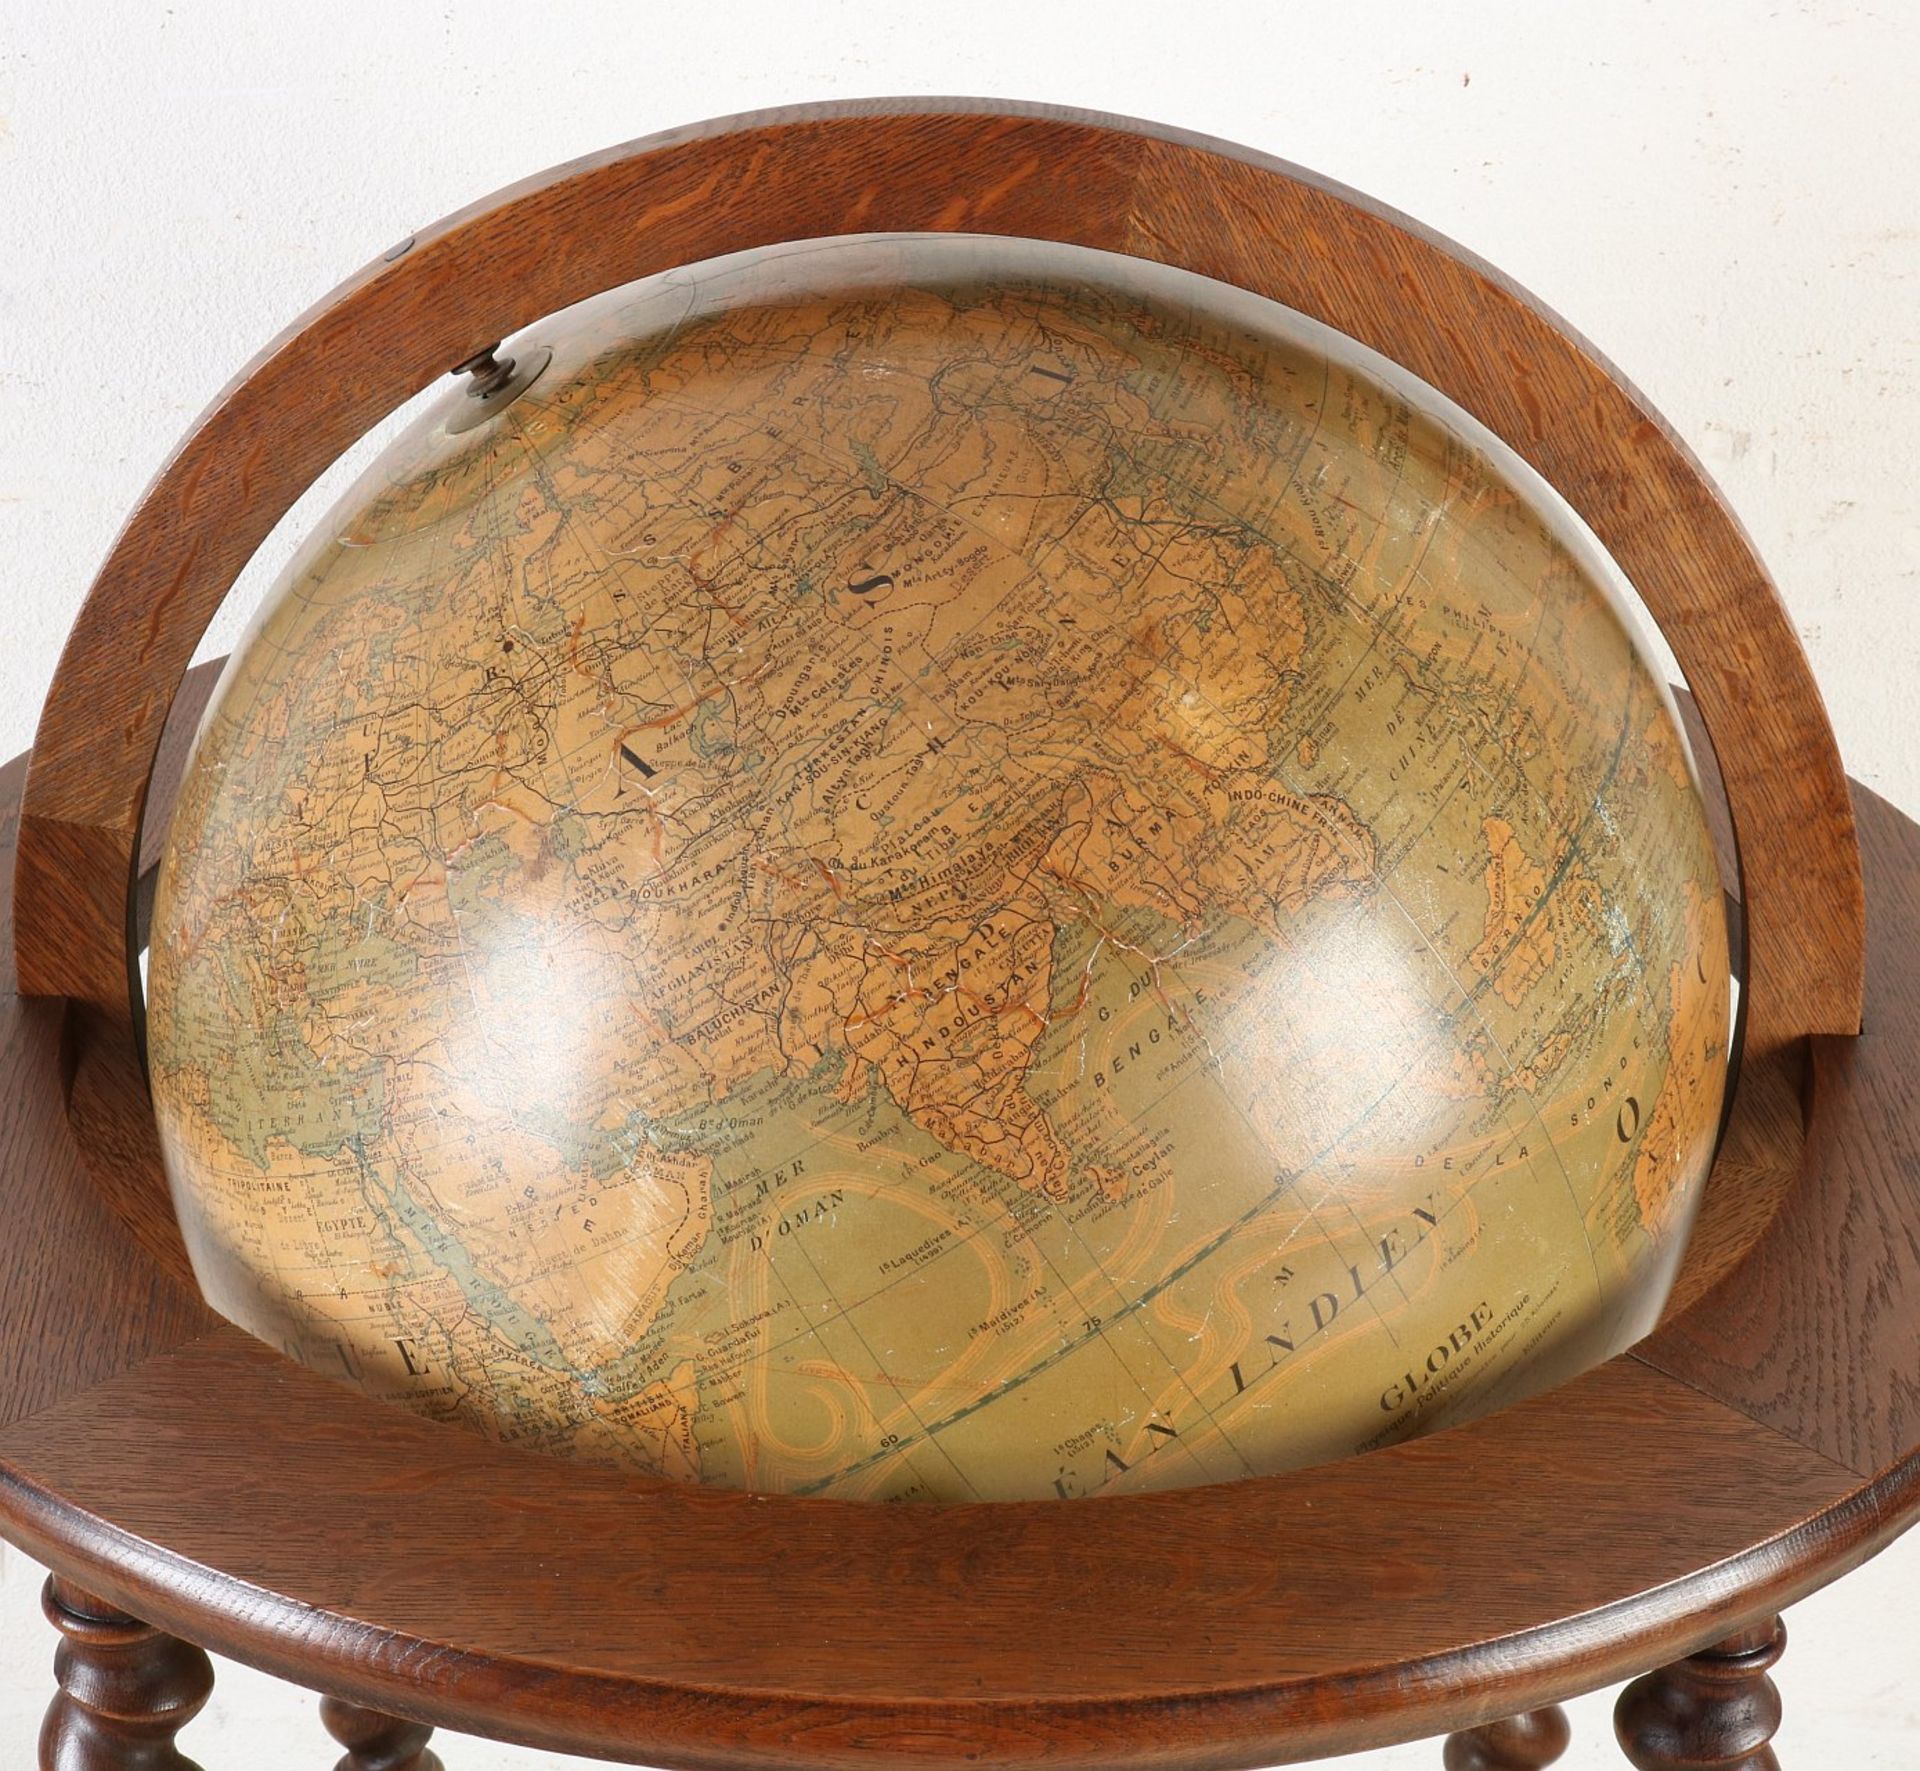 Antique globe in holder, 1900 - Image 3 of 4